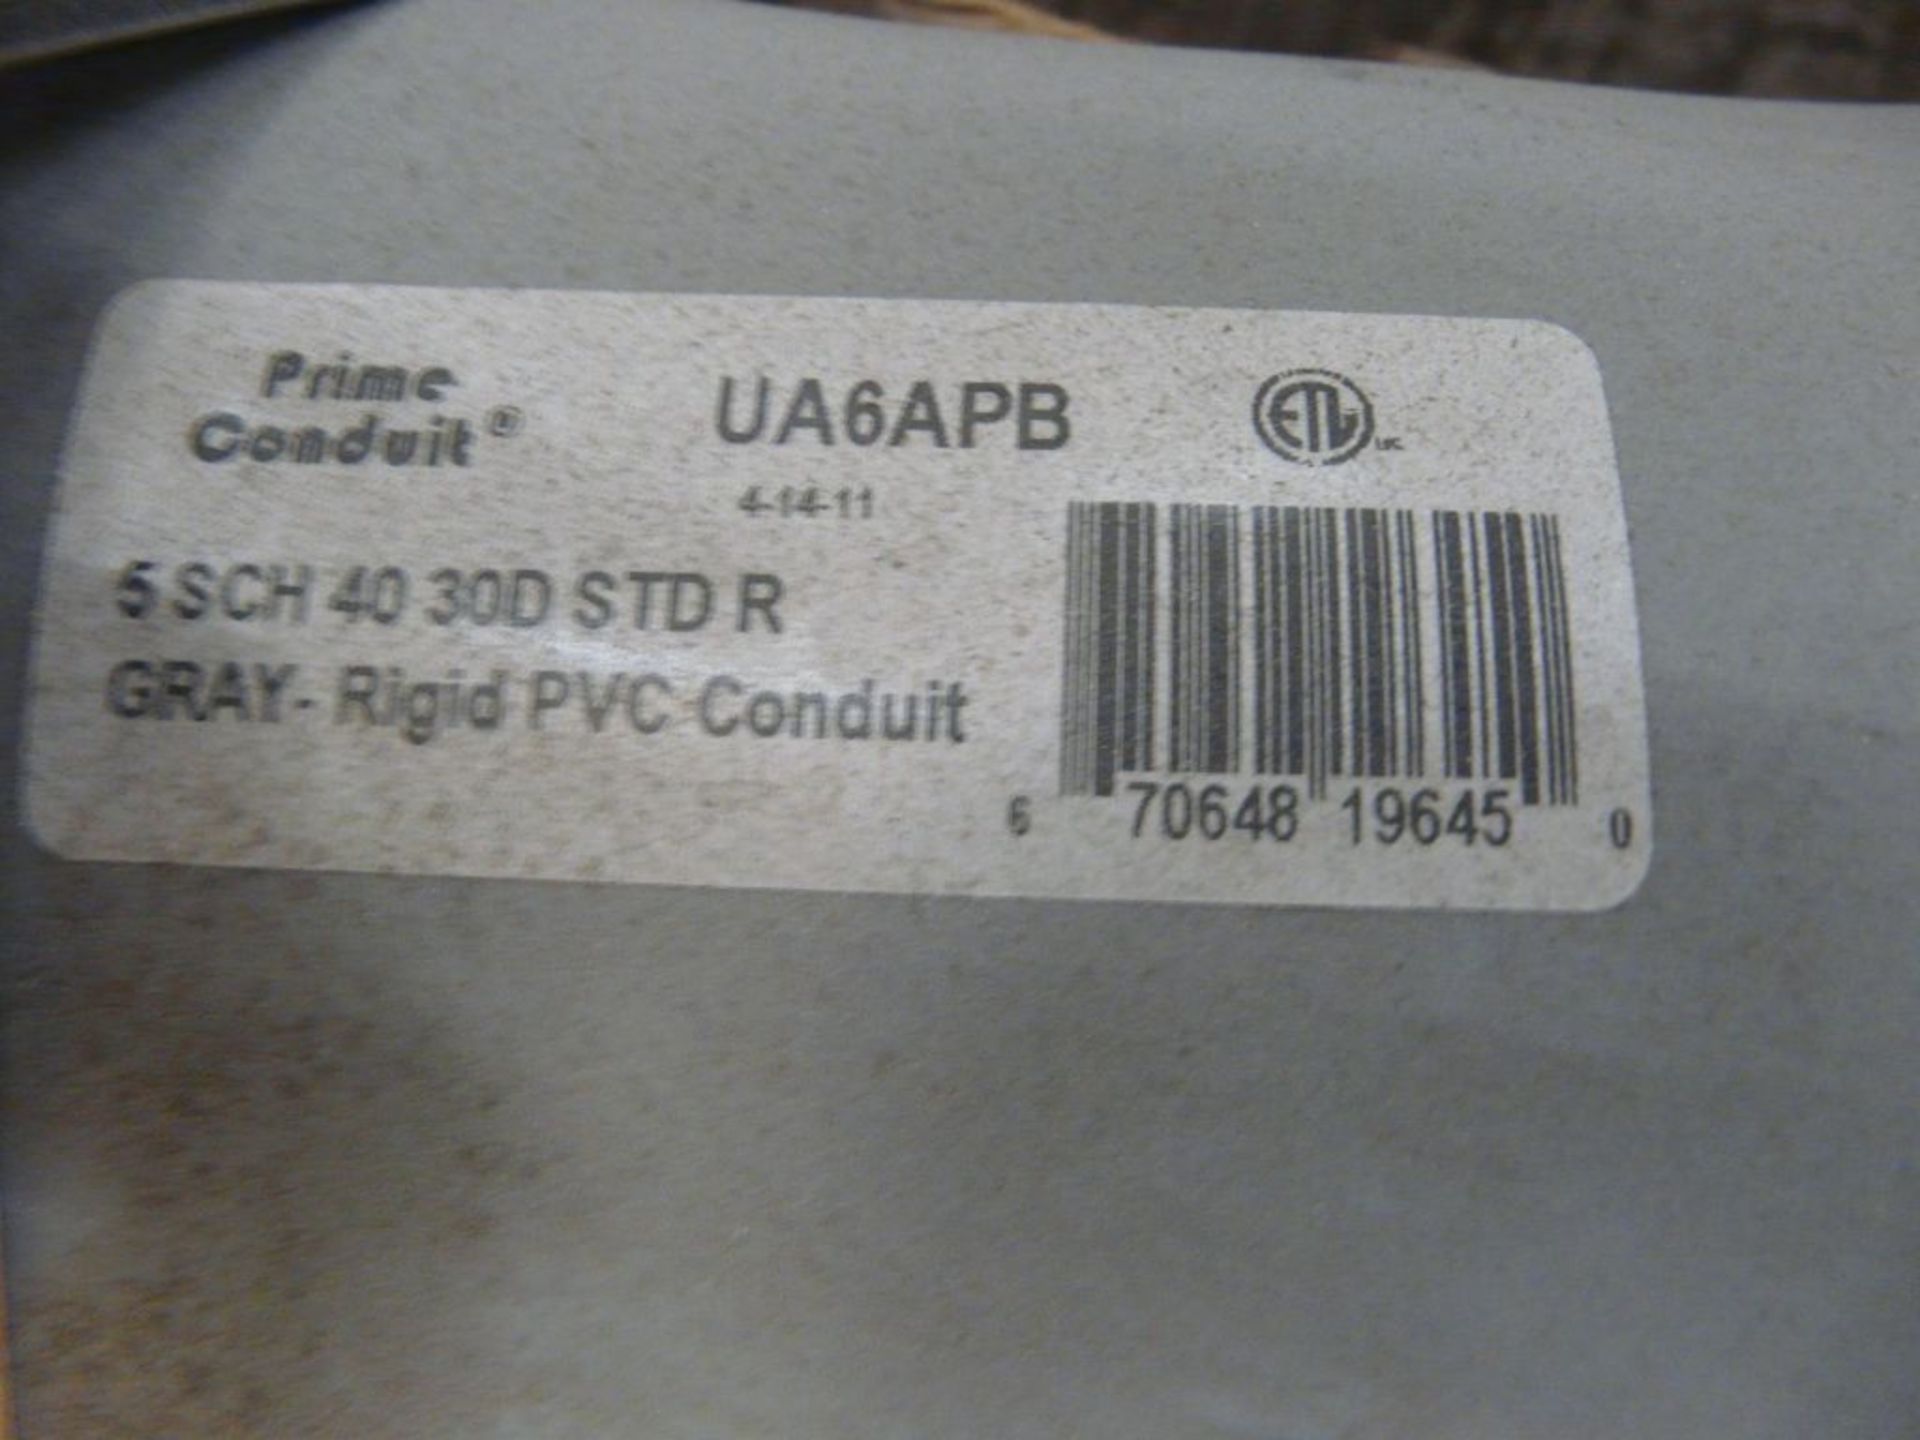 Lot of (14) Ridgid Gray PVC Conduit Pieces | Part No. 5 SCH 40 30D STD R; UA6APB - Image 3 of 4